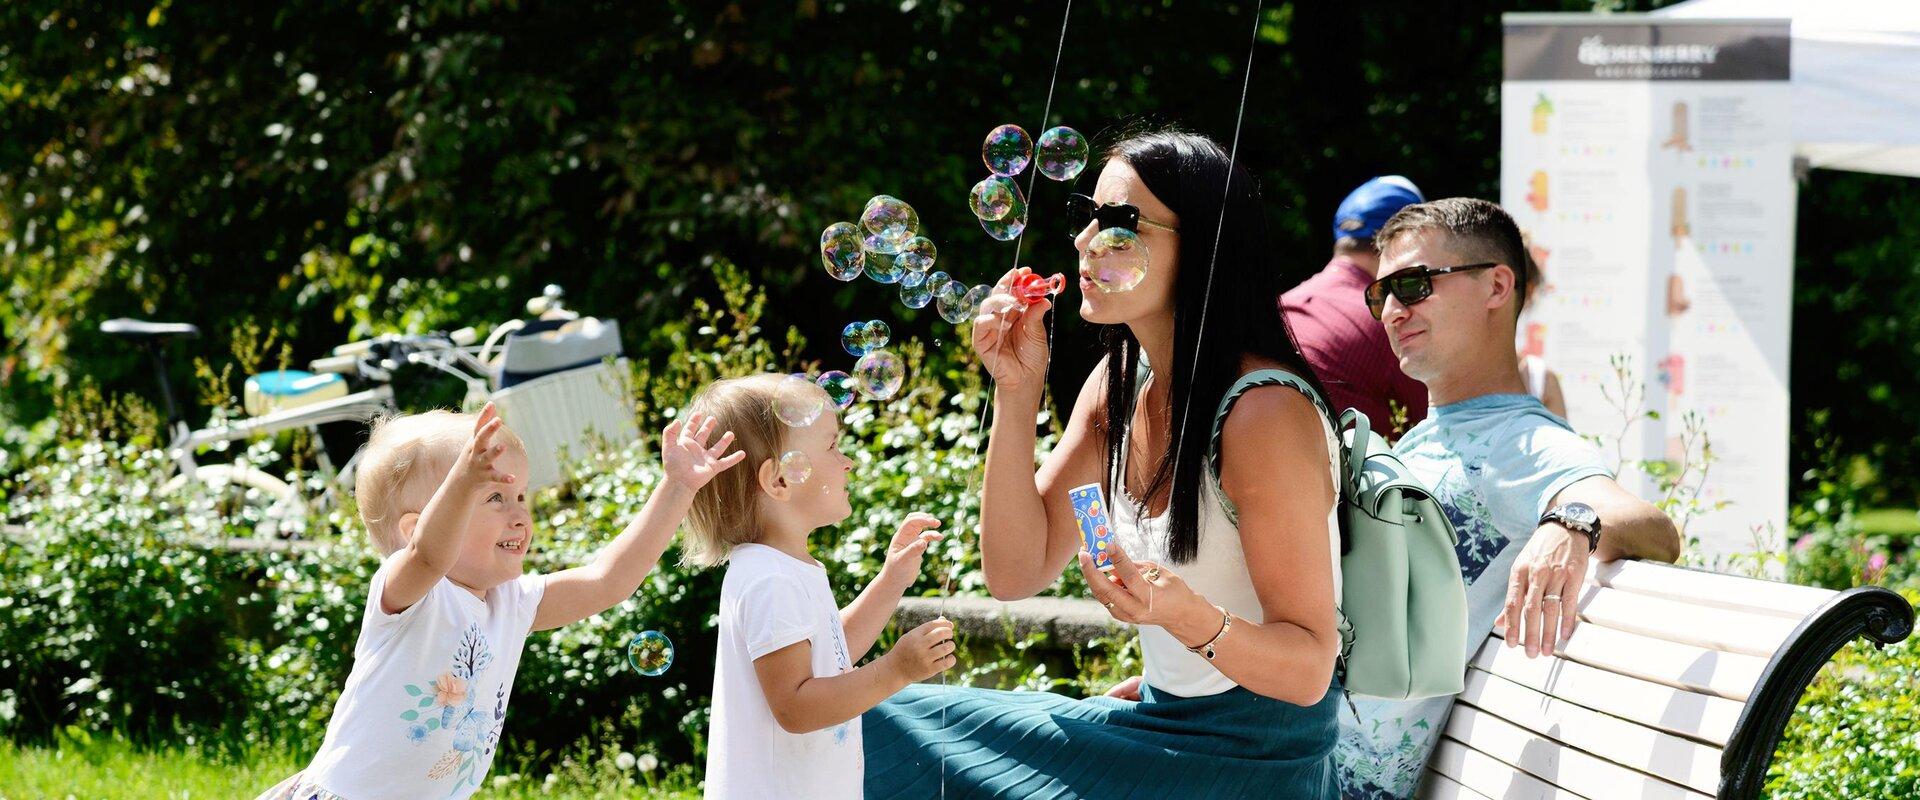 Bubblefest – bubble festival in the summer capital